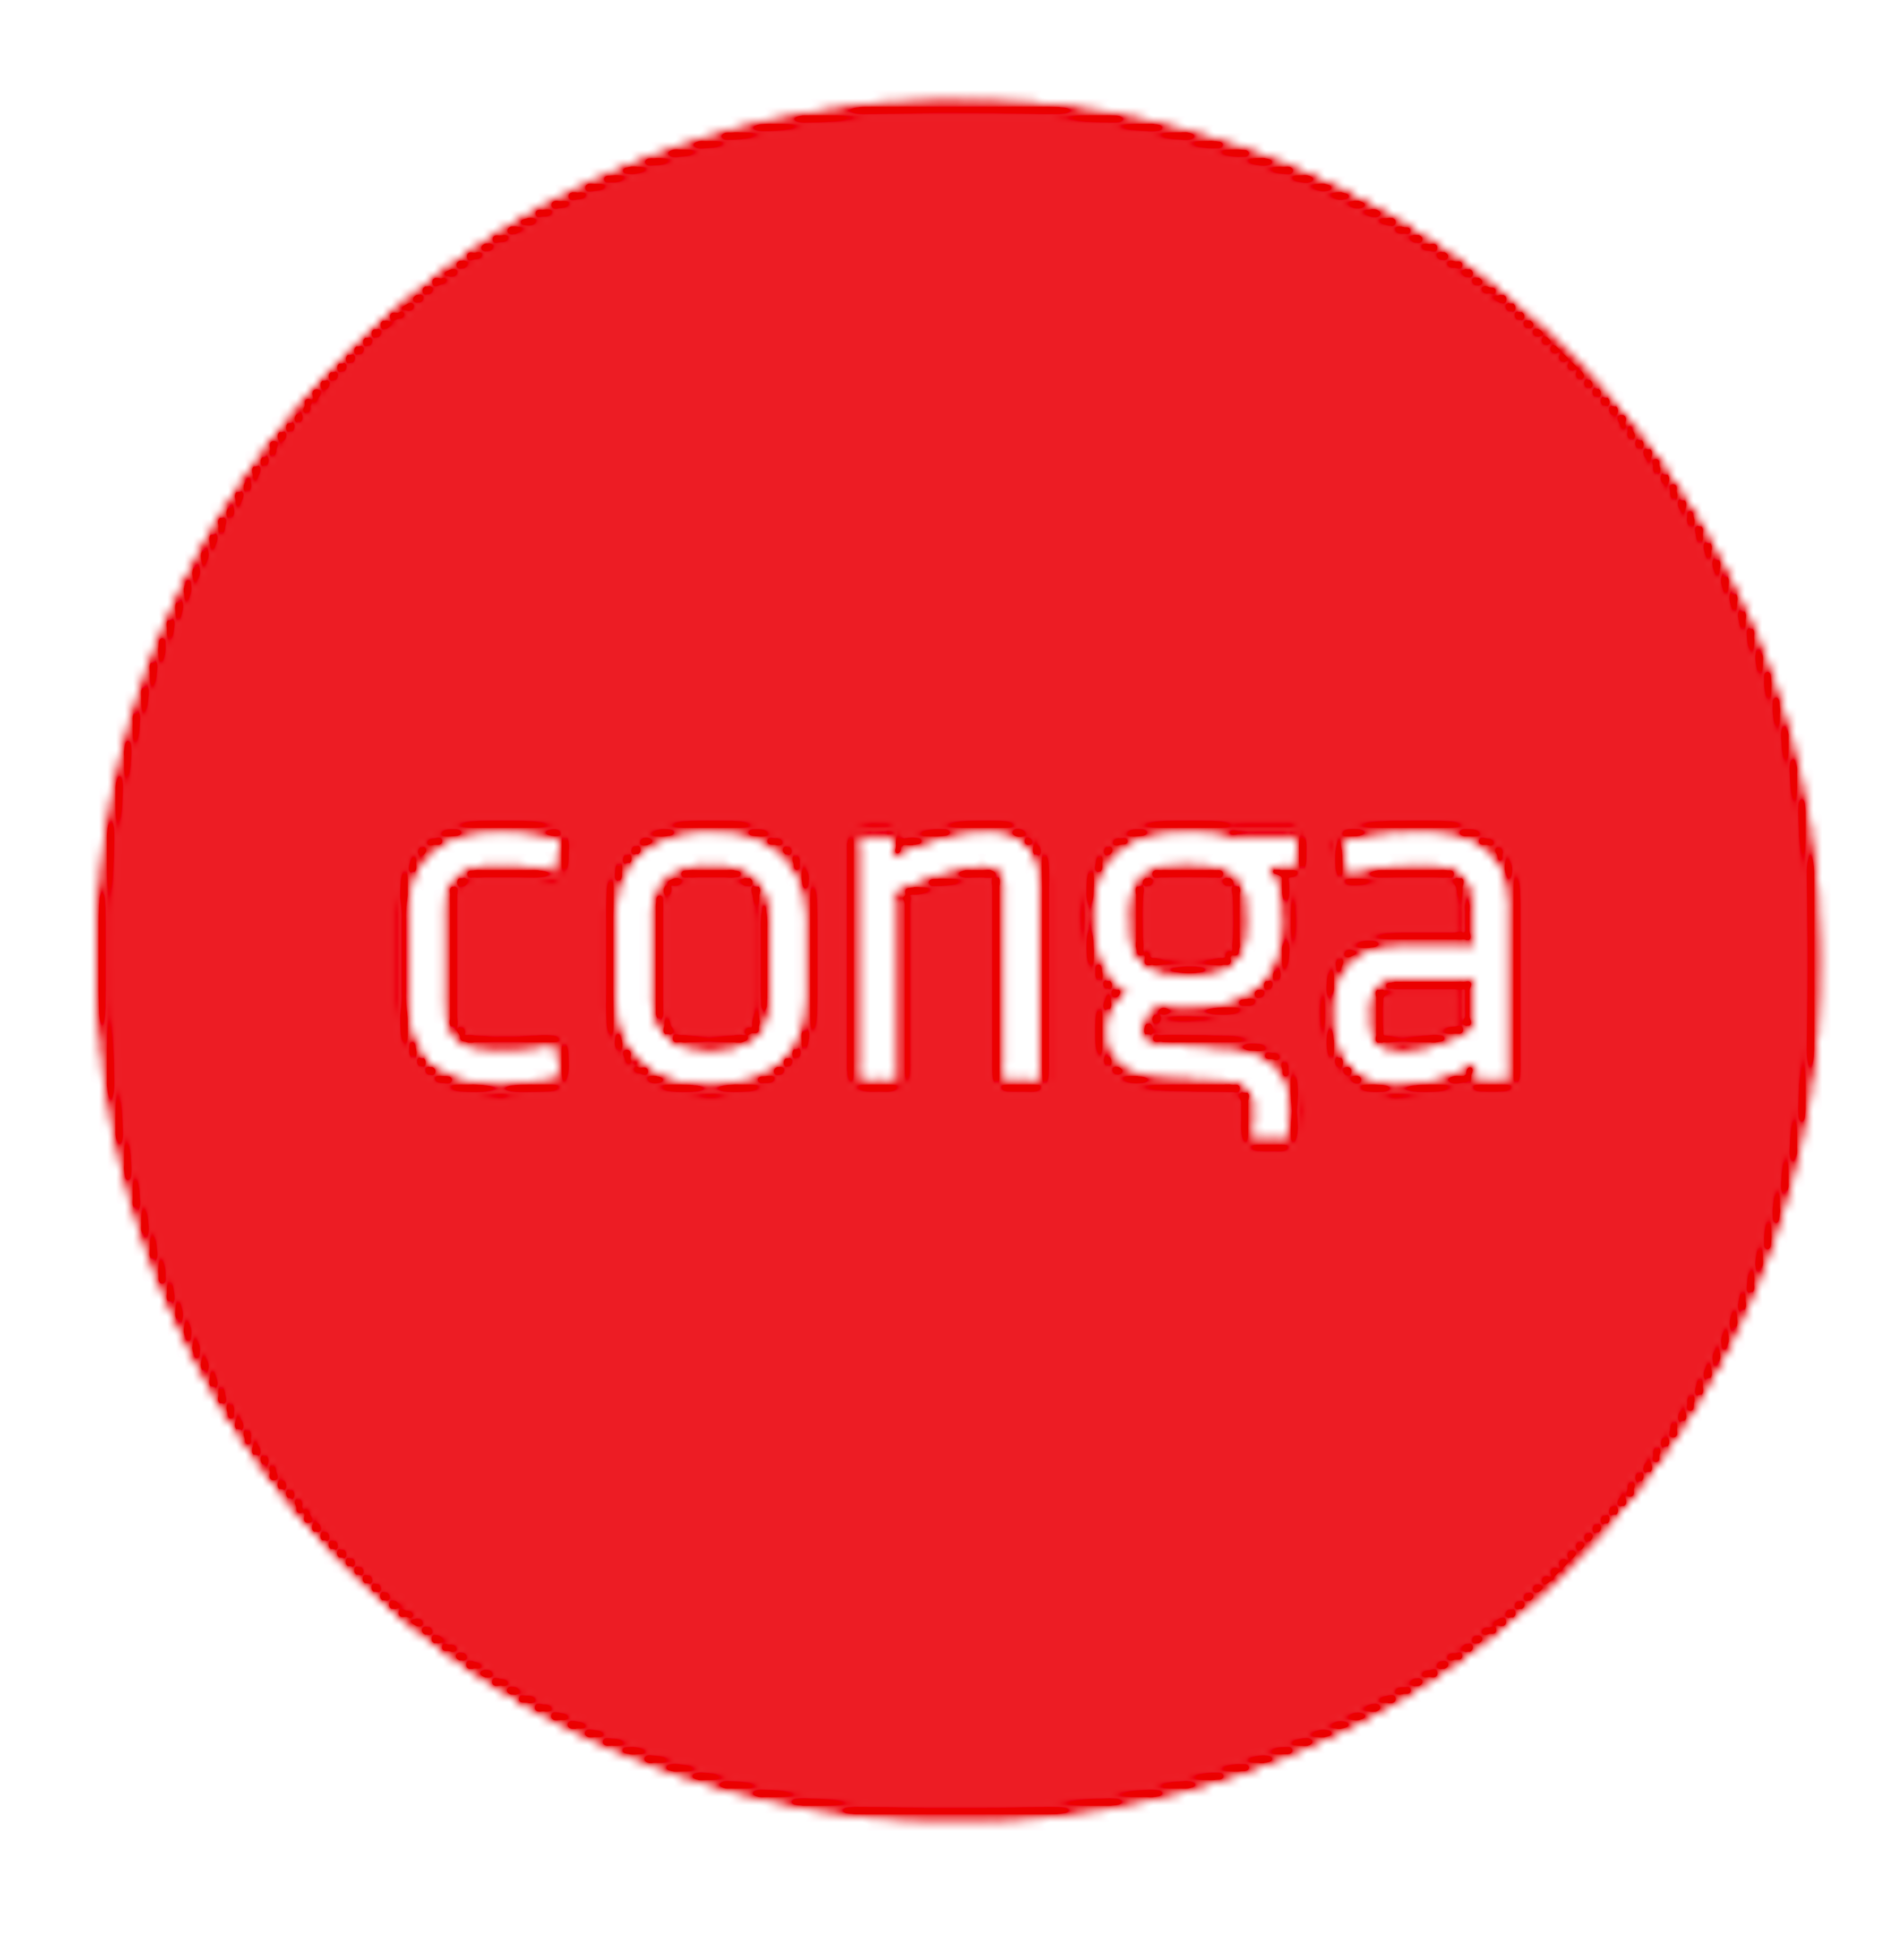 Conga Contracts Logo